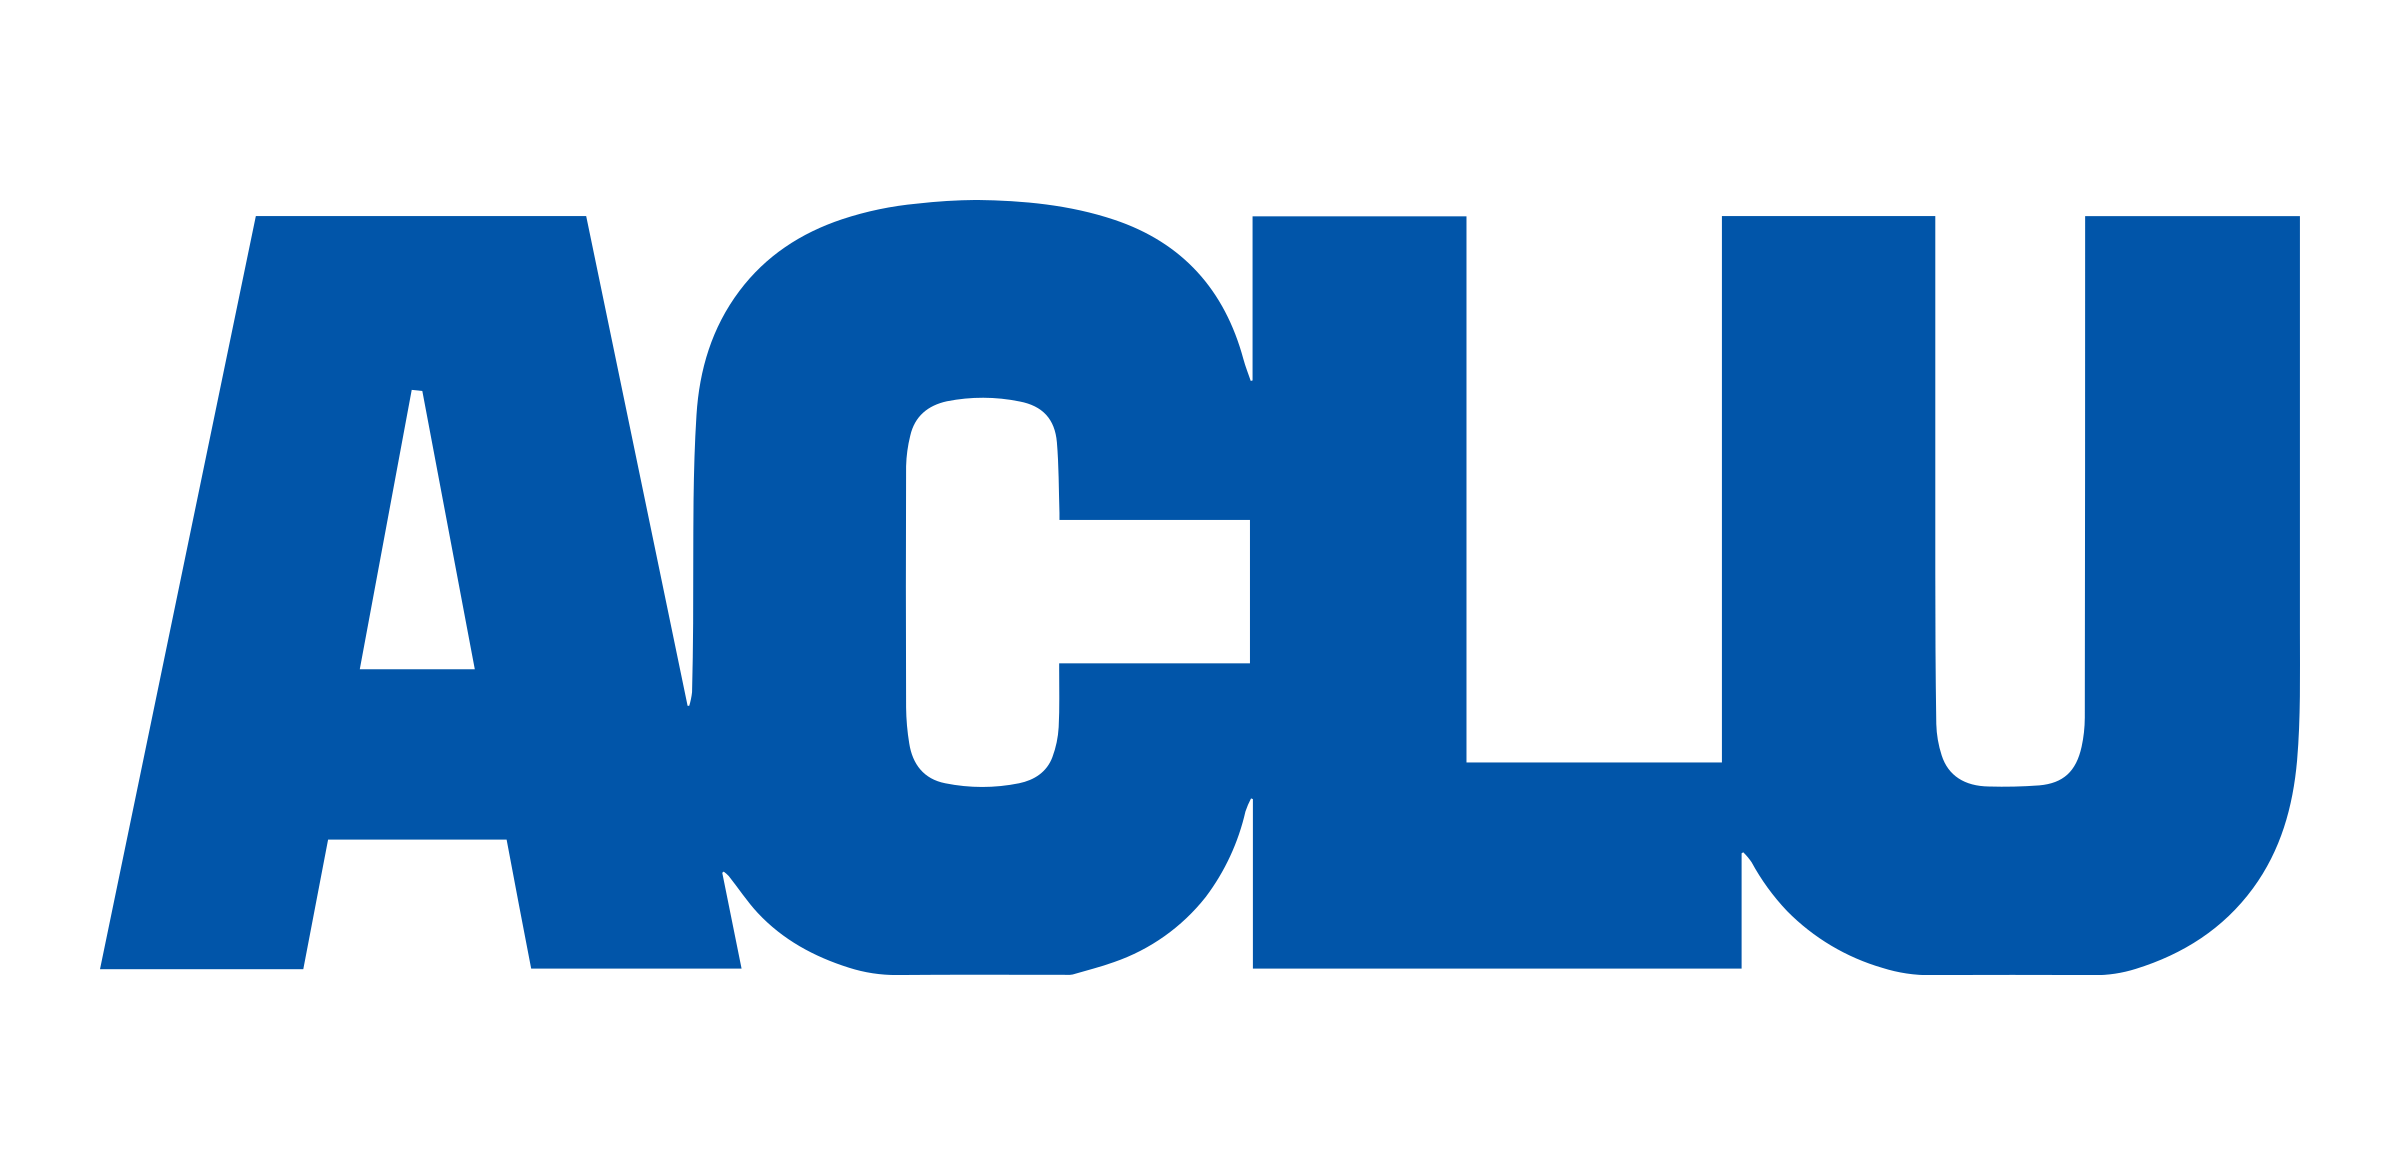 ACLU Logo - ACLU Logo PNG Transparent & SVG Vector